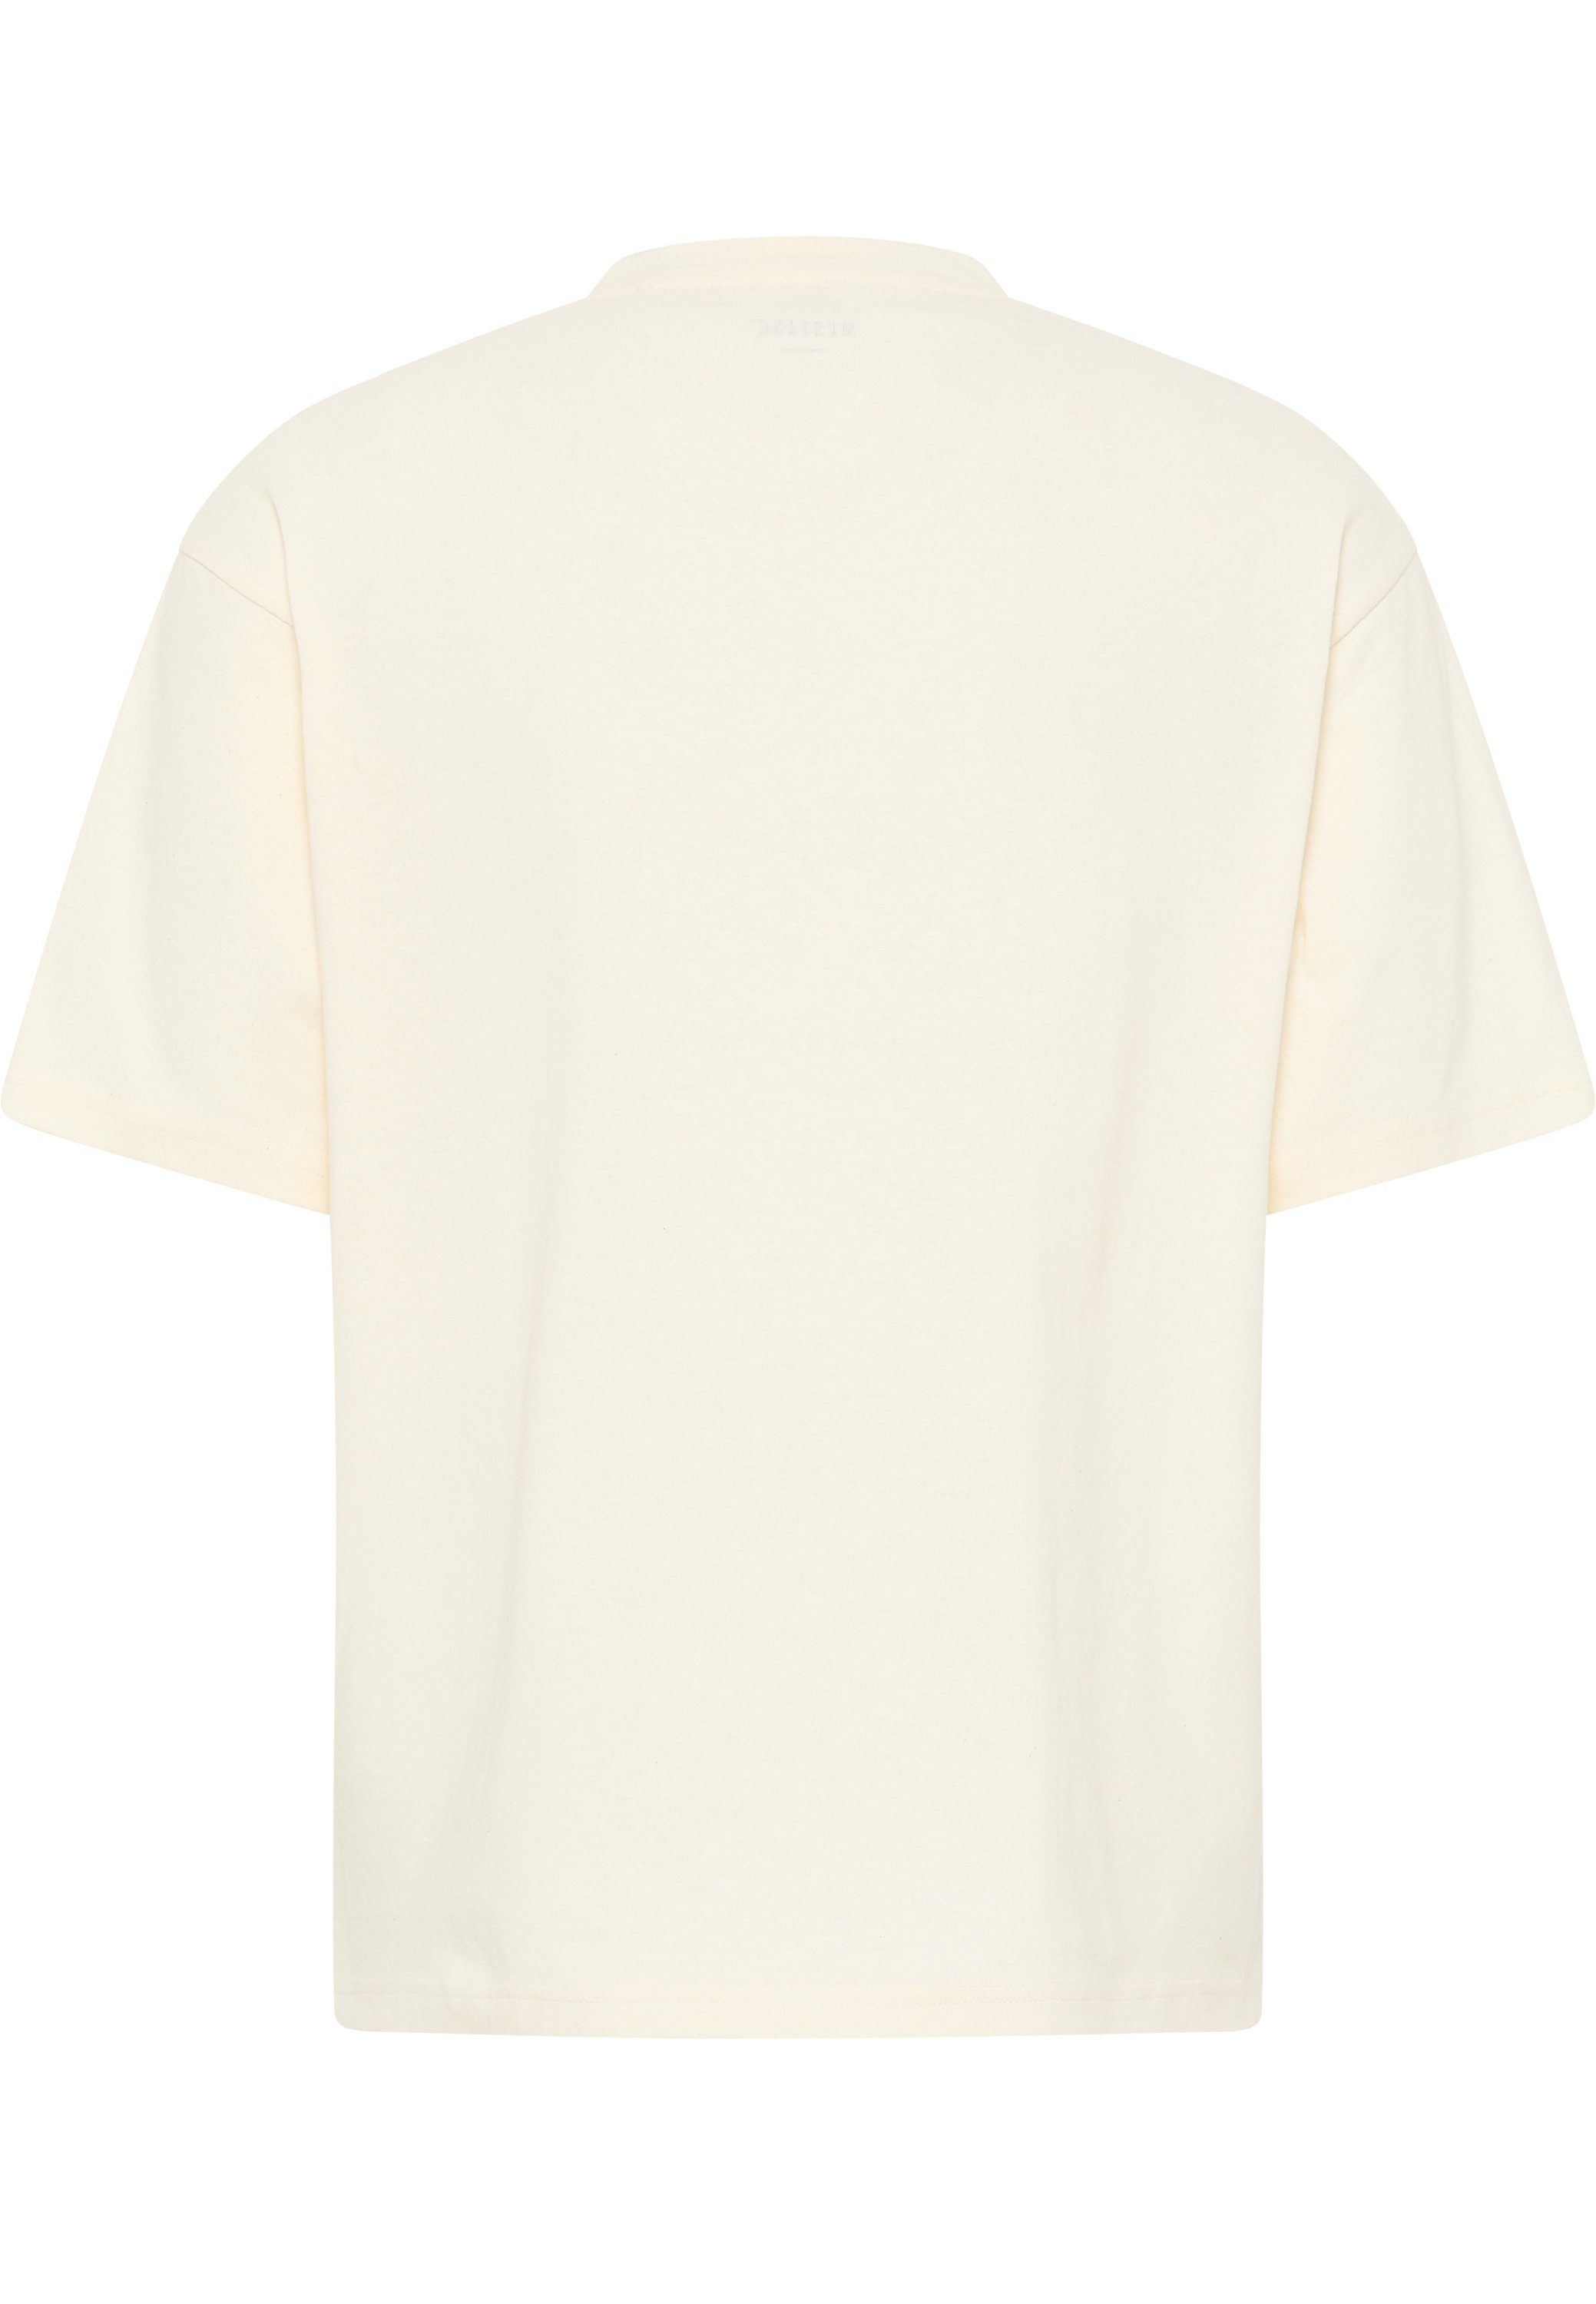 MUSTANG Label-Applikation auf Kurzarmshirt Brusthöhe T-Shirt,